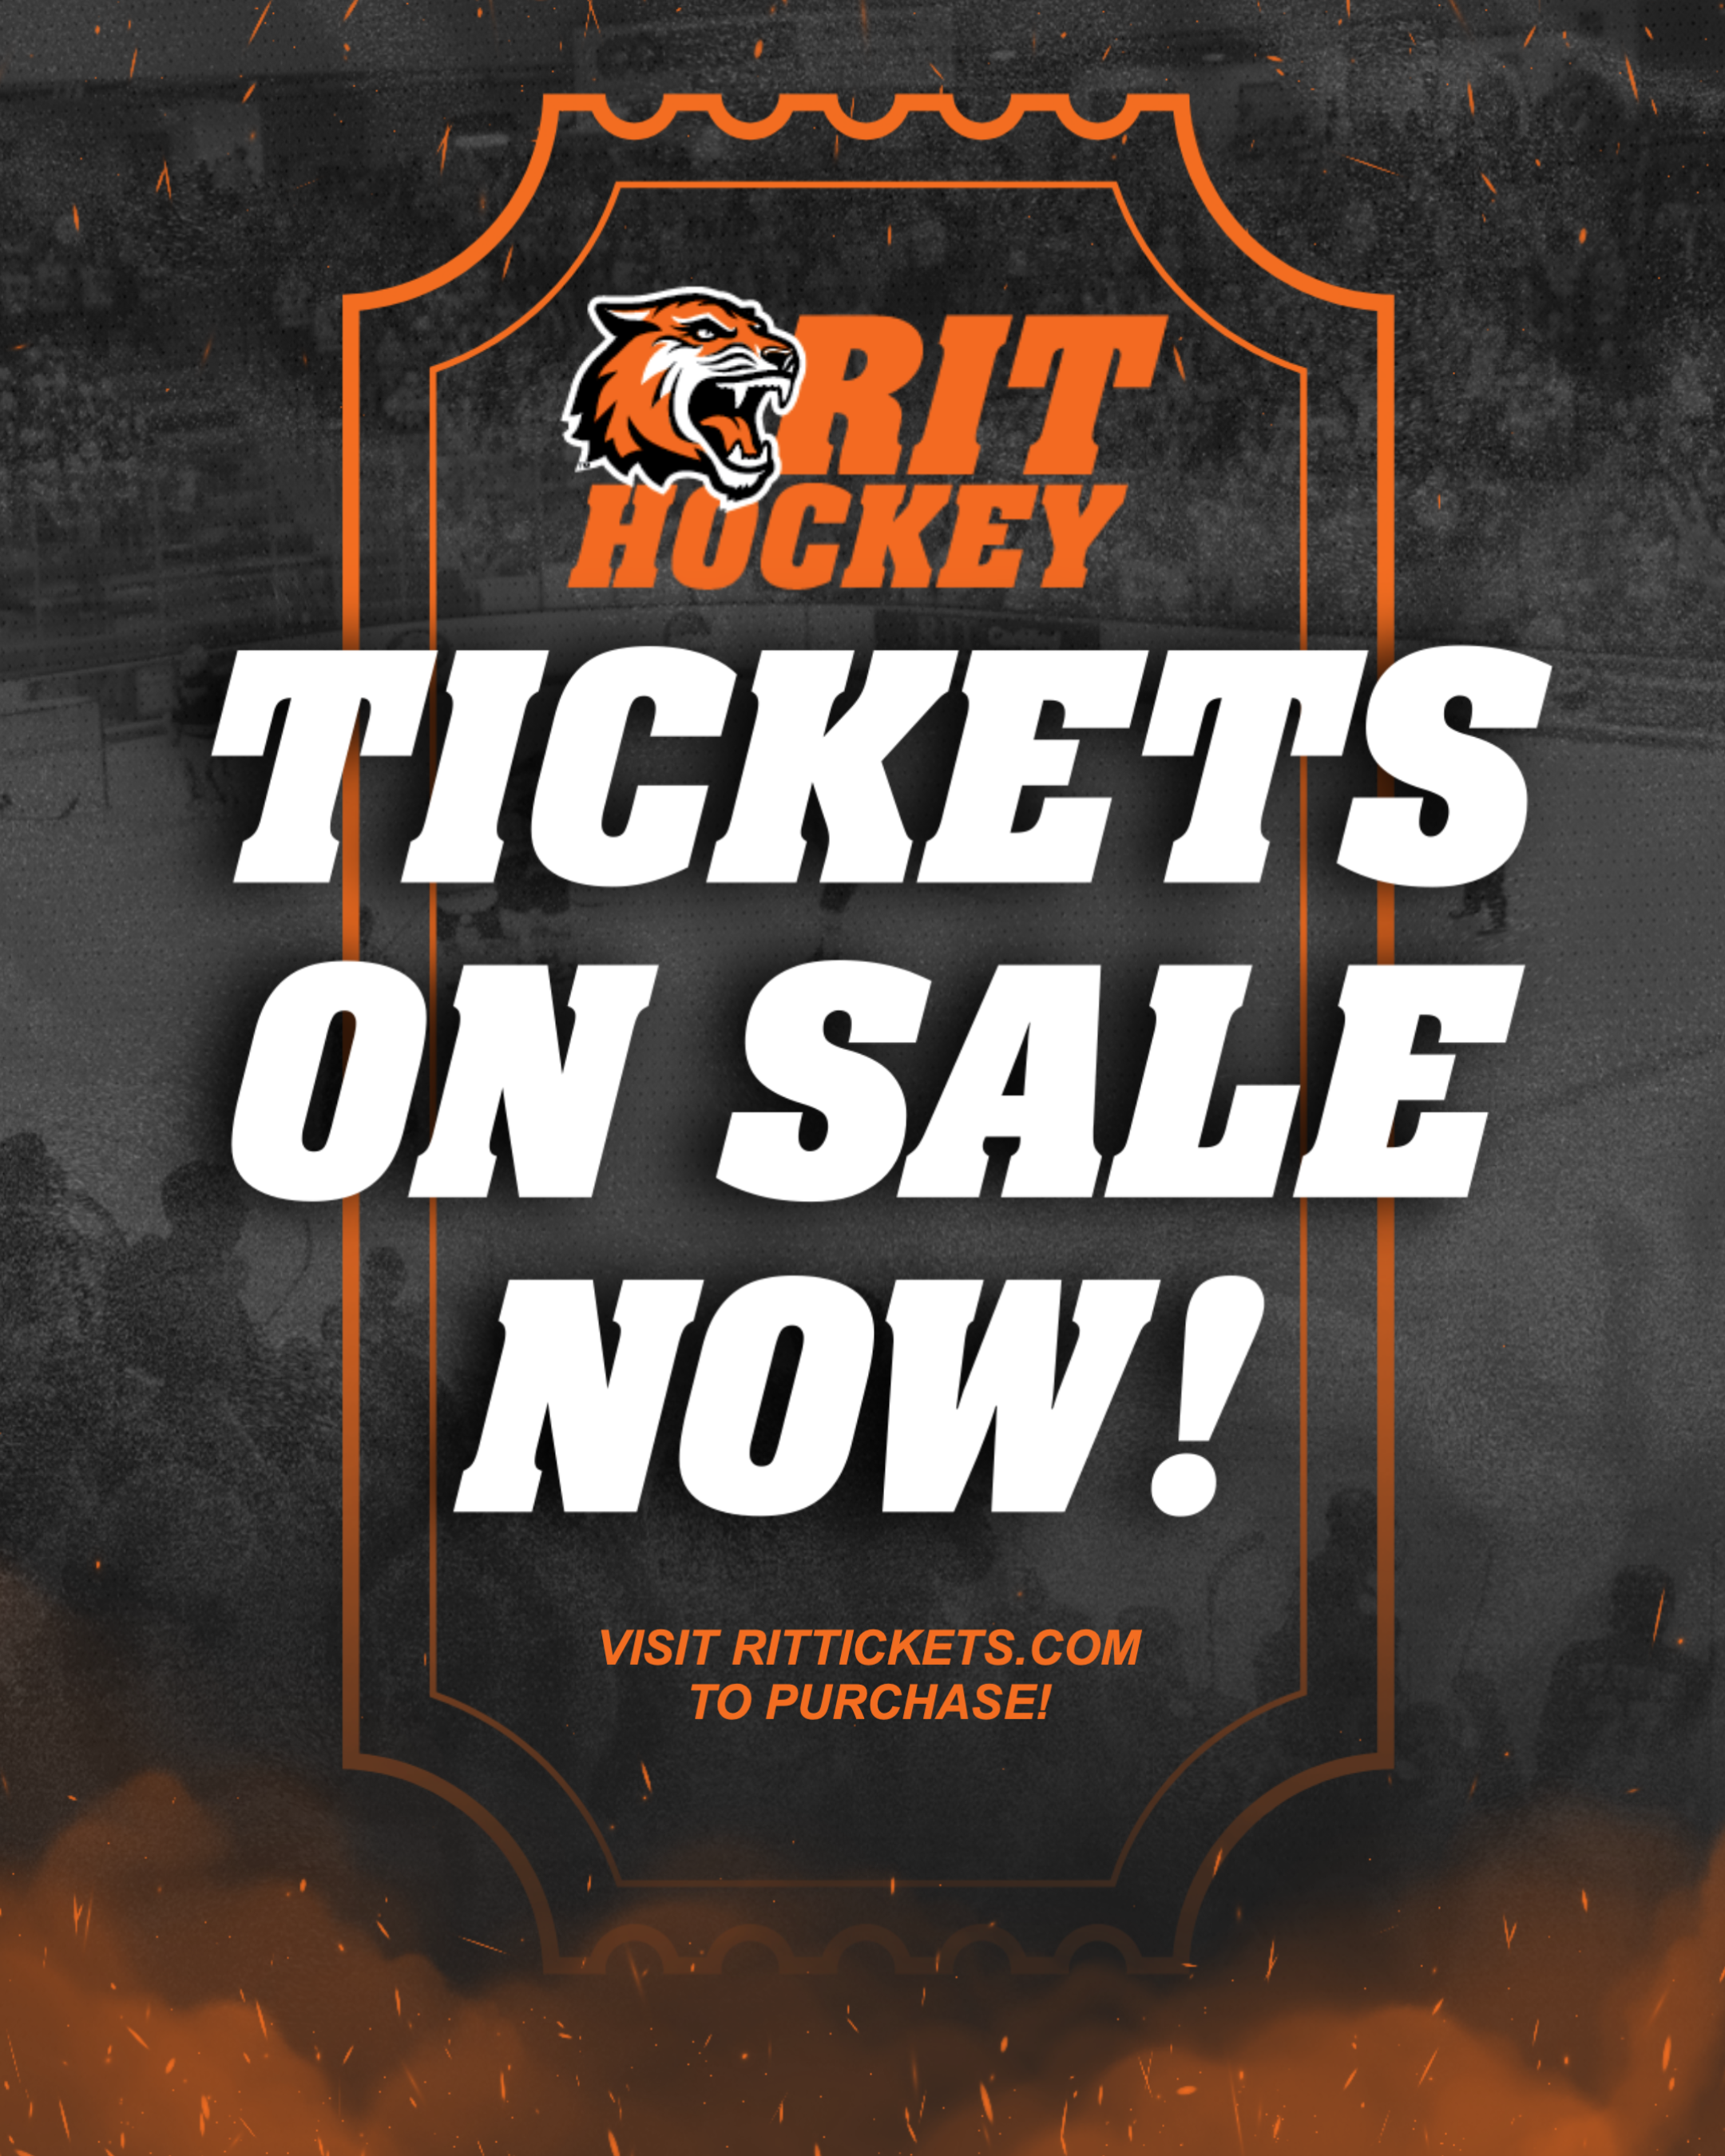 RIT Hockey Tickets On Sale Now!